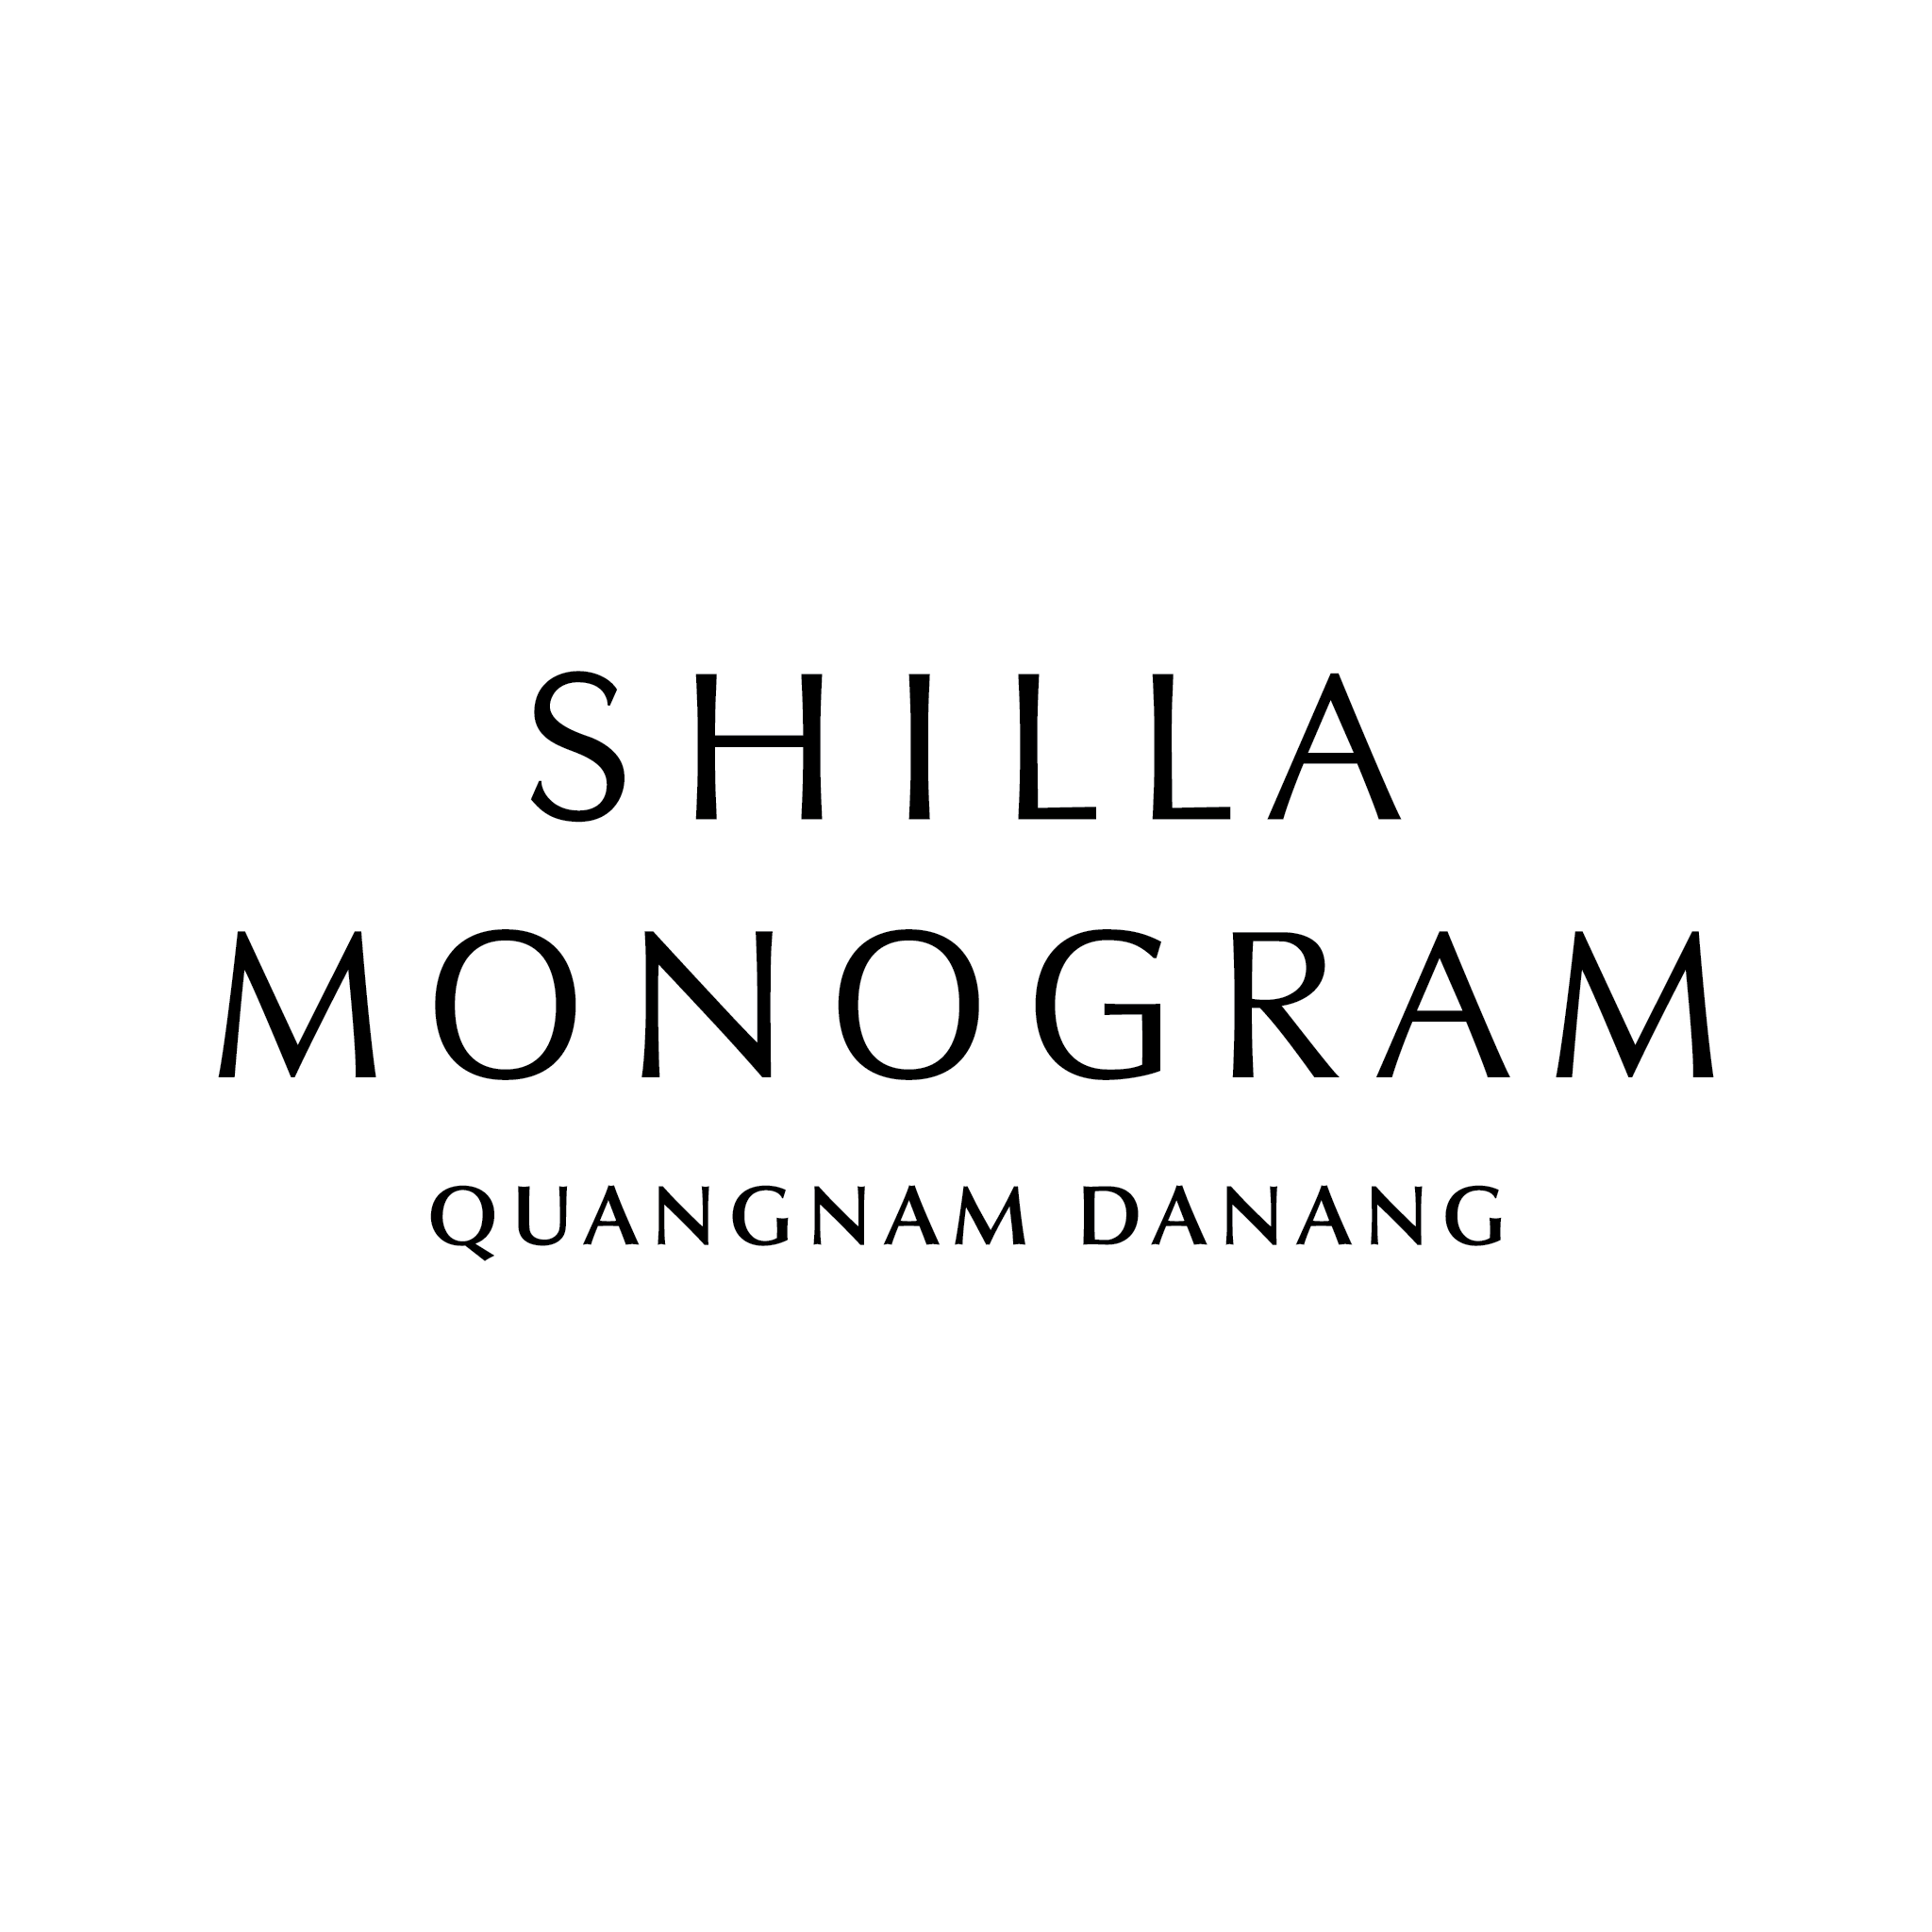 Shilla Monogram Quangnam Danang Resort – The Shilla Hotels & Resorts, Samsung Group